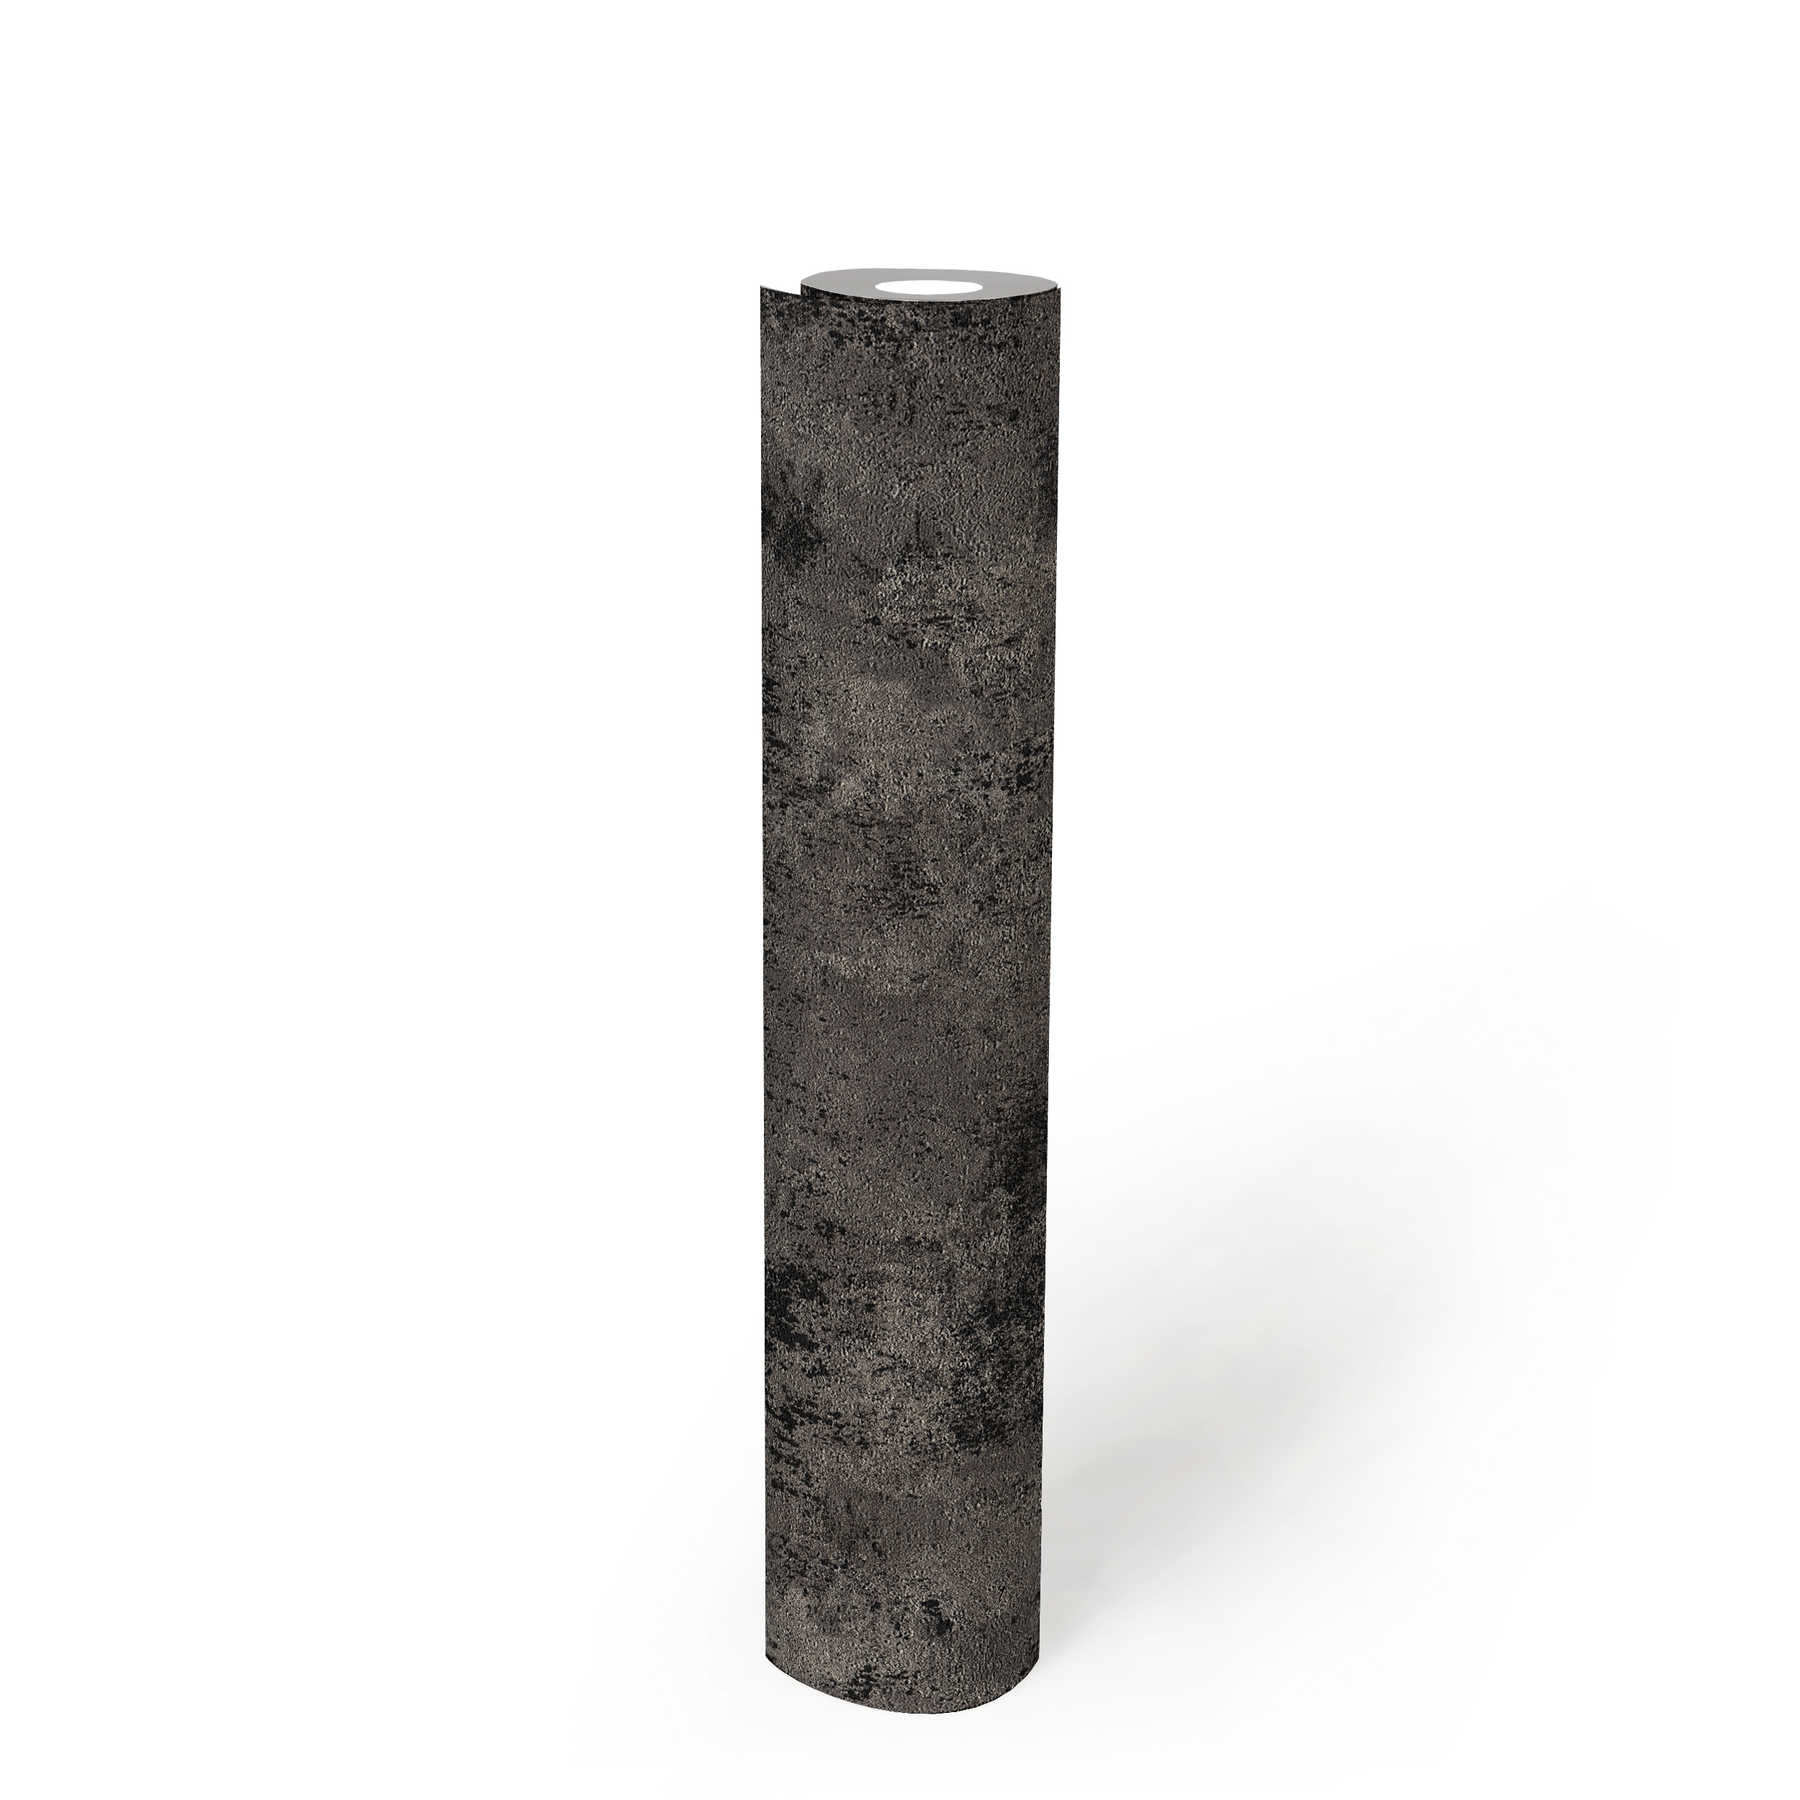             Papel pintado no tejido oscuro estructura rústica - negro, plata
        